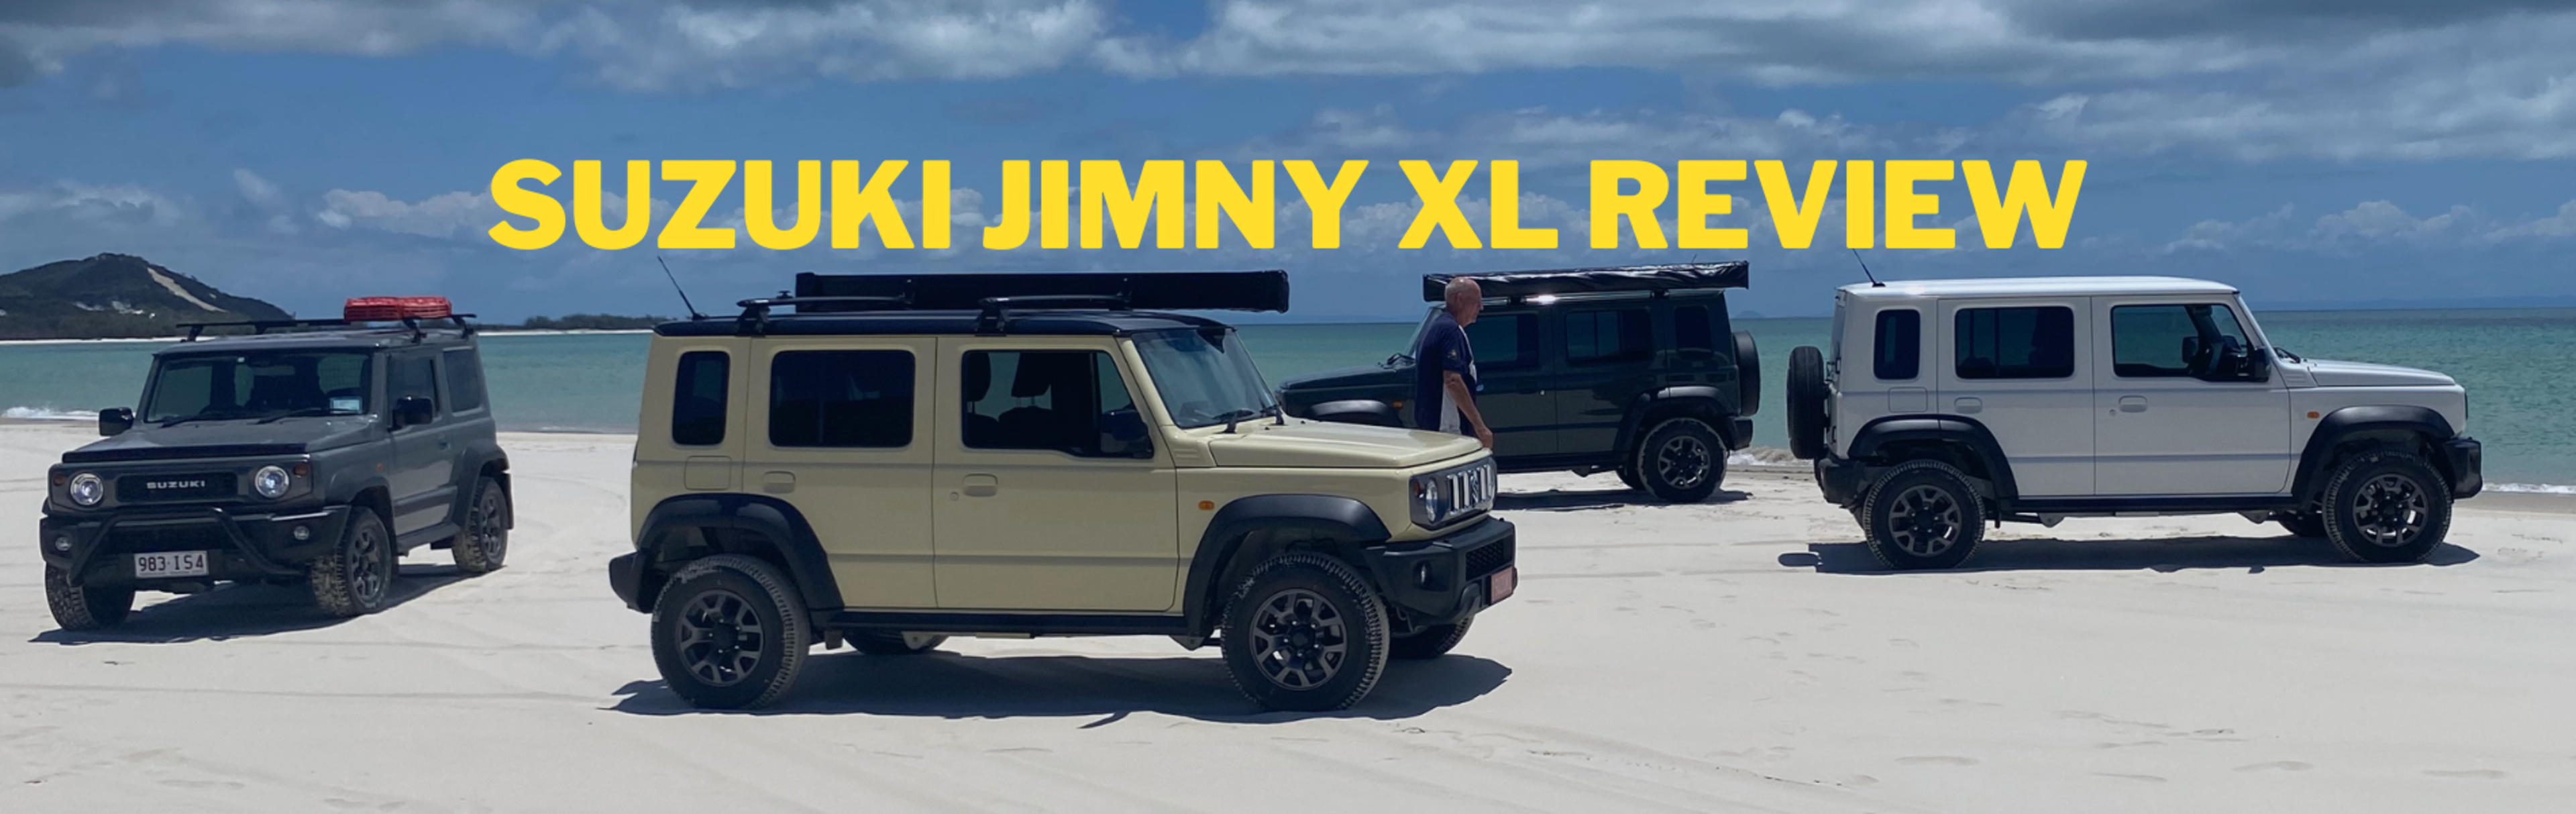 Suzuki Jimny XL Review banner